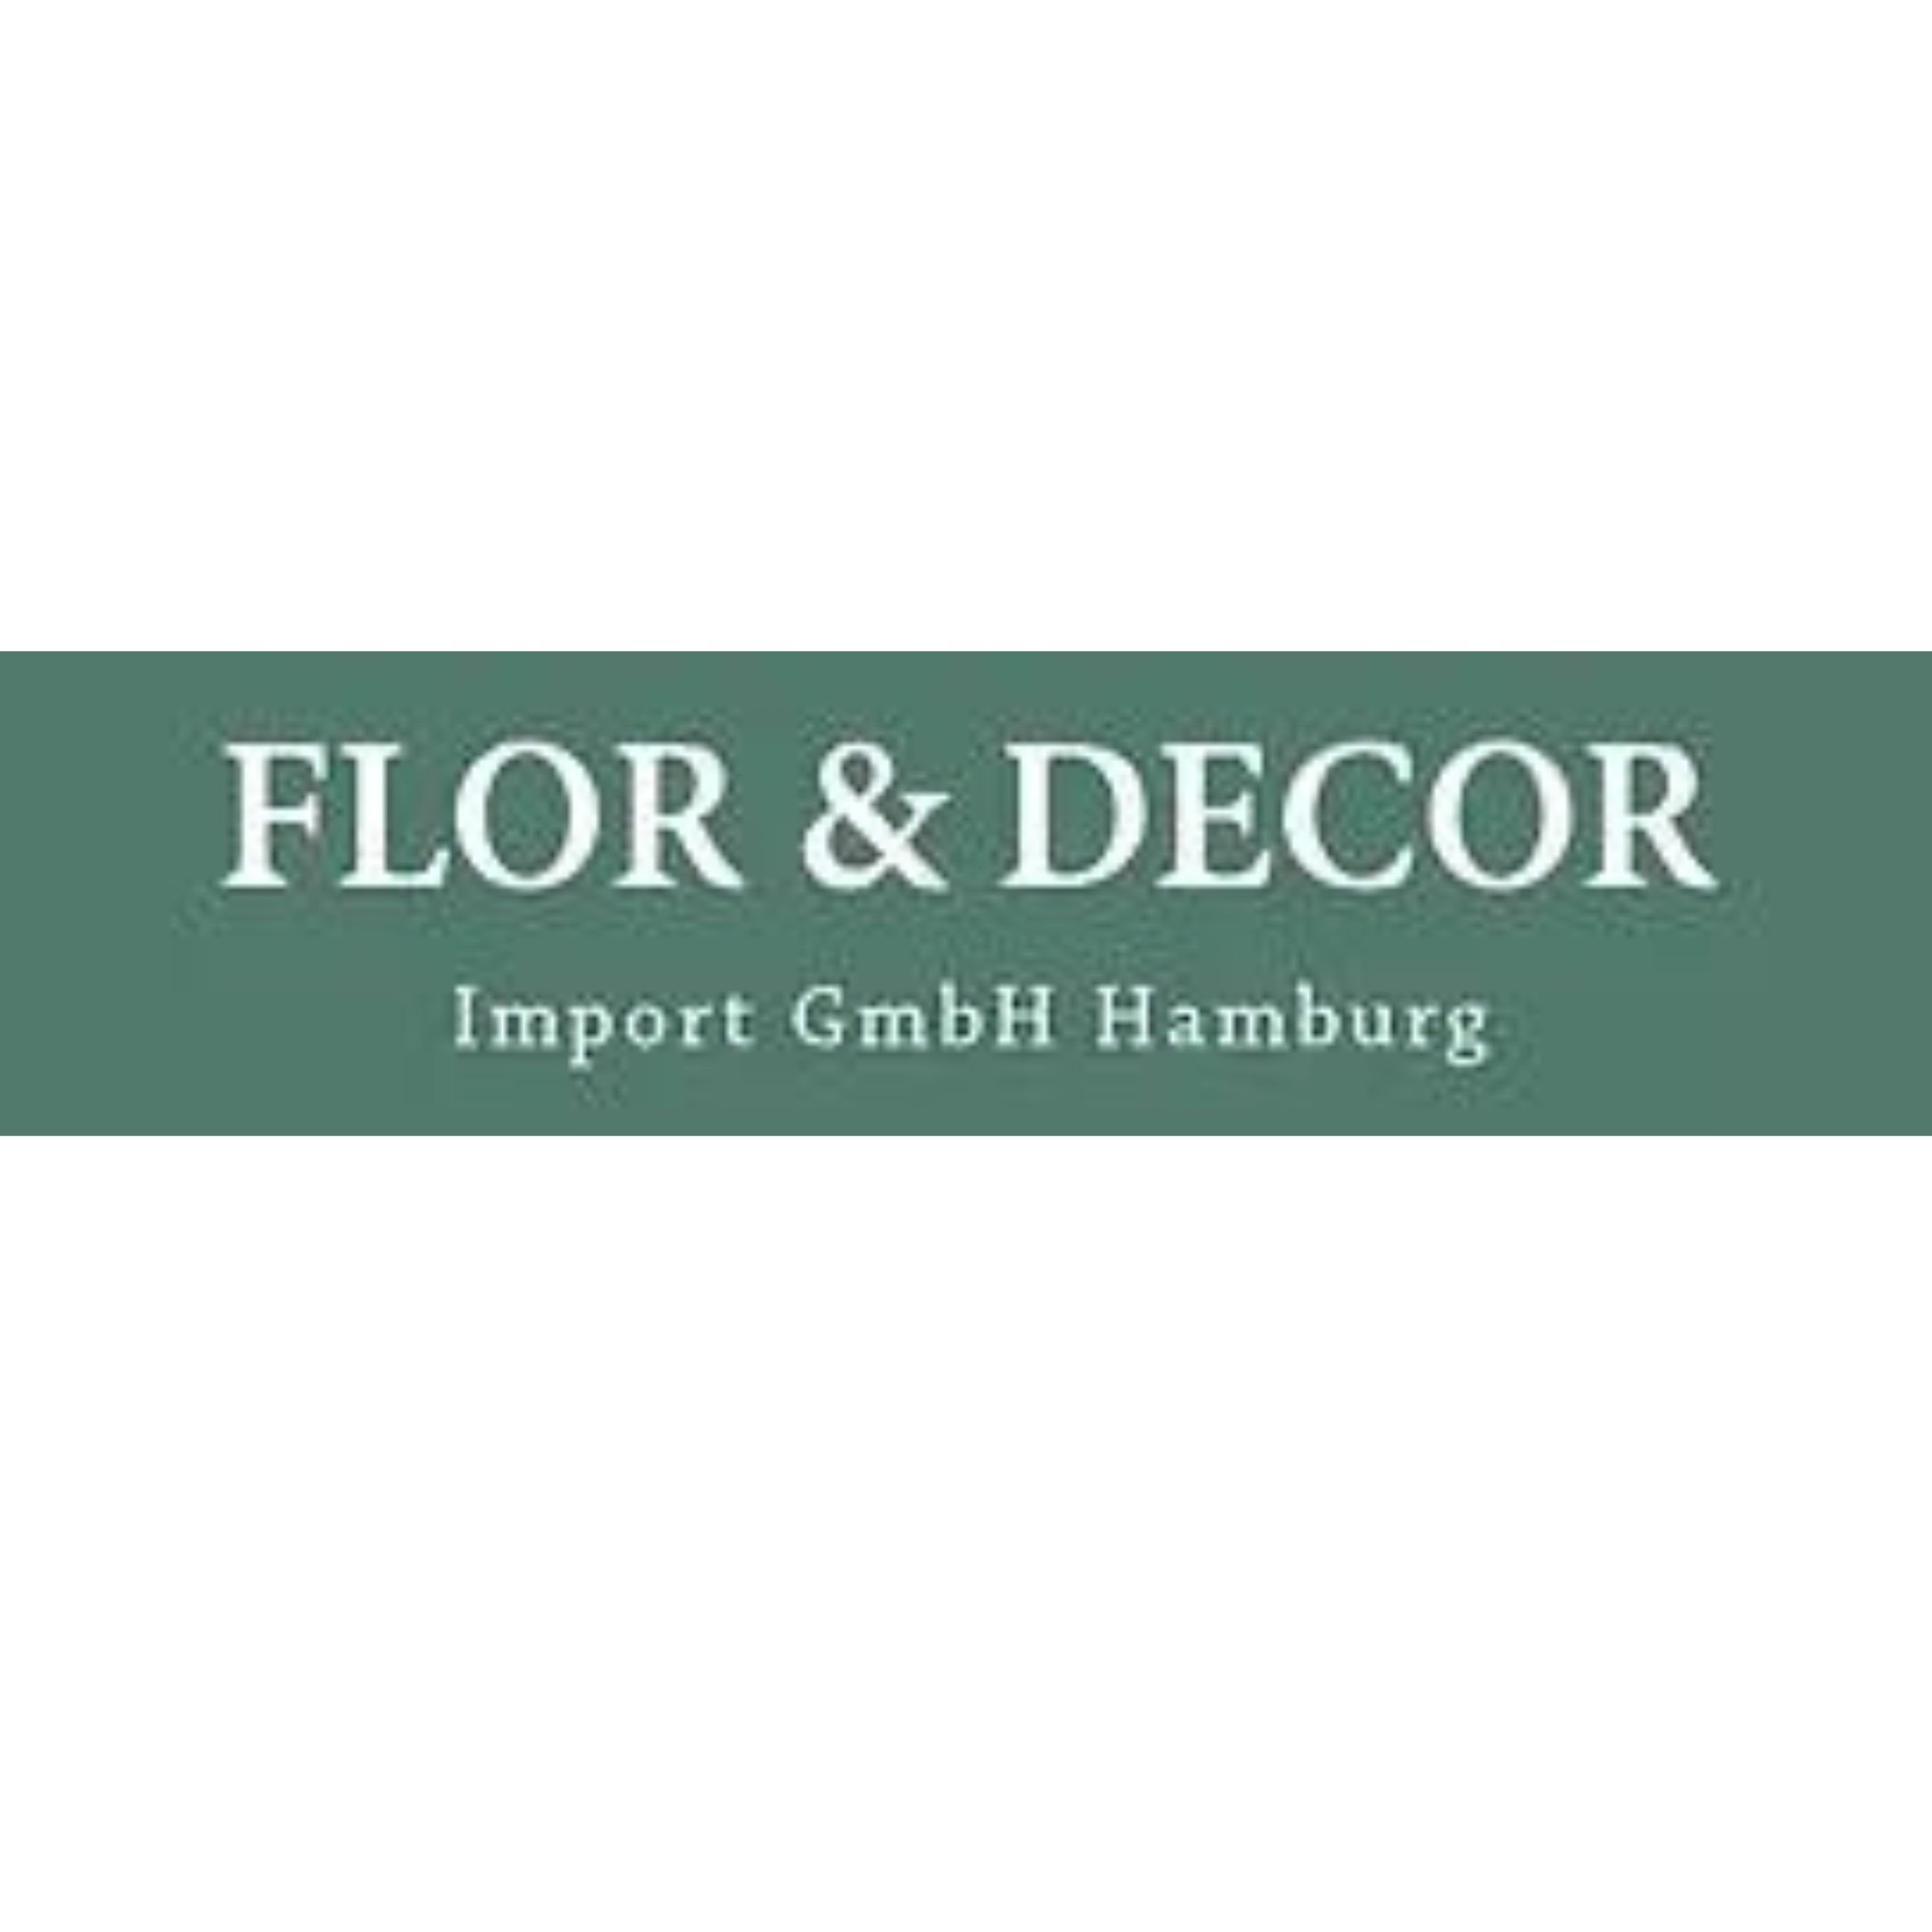 Flor & Decor Import GmbH